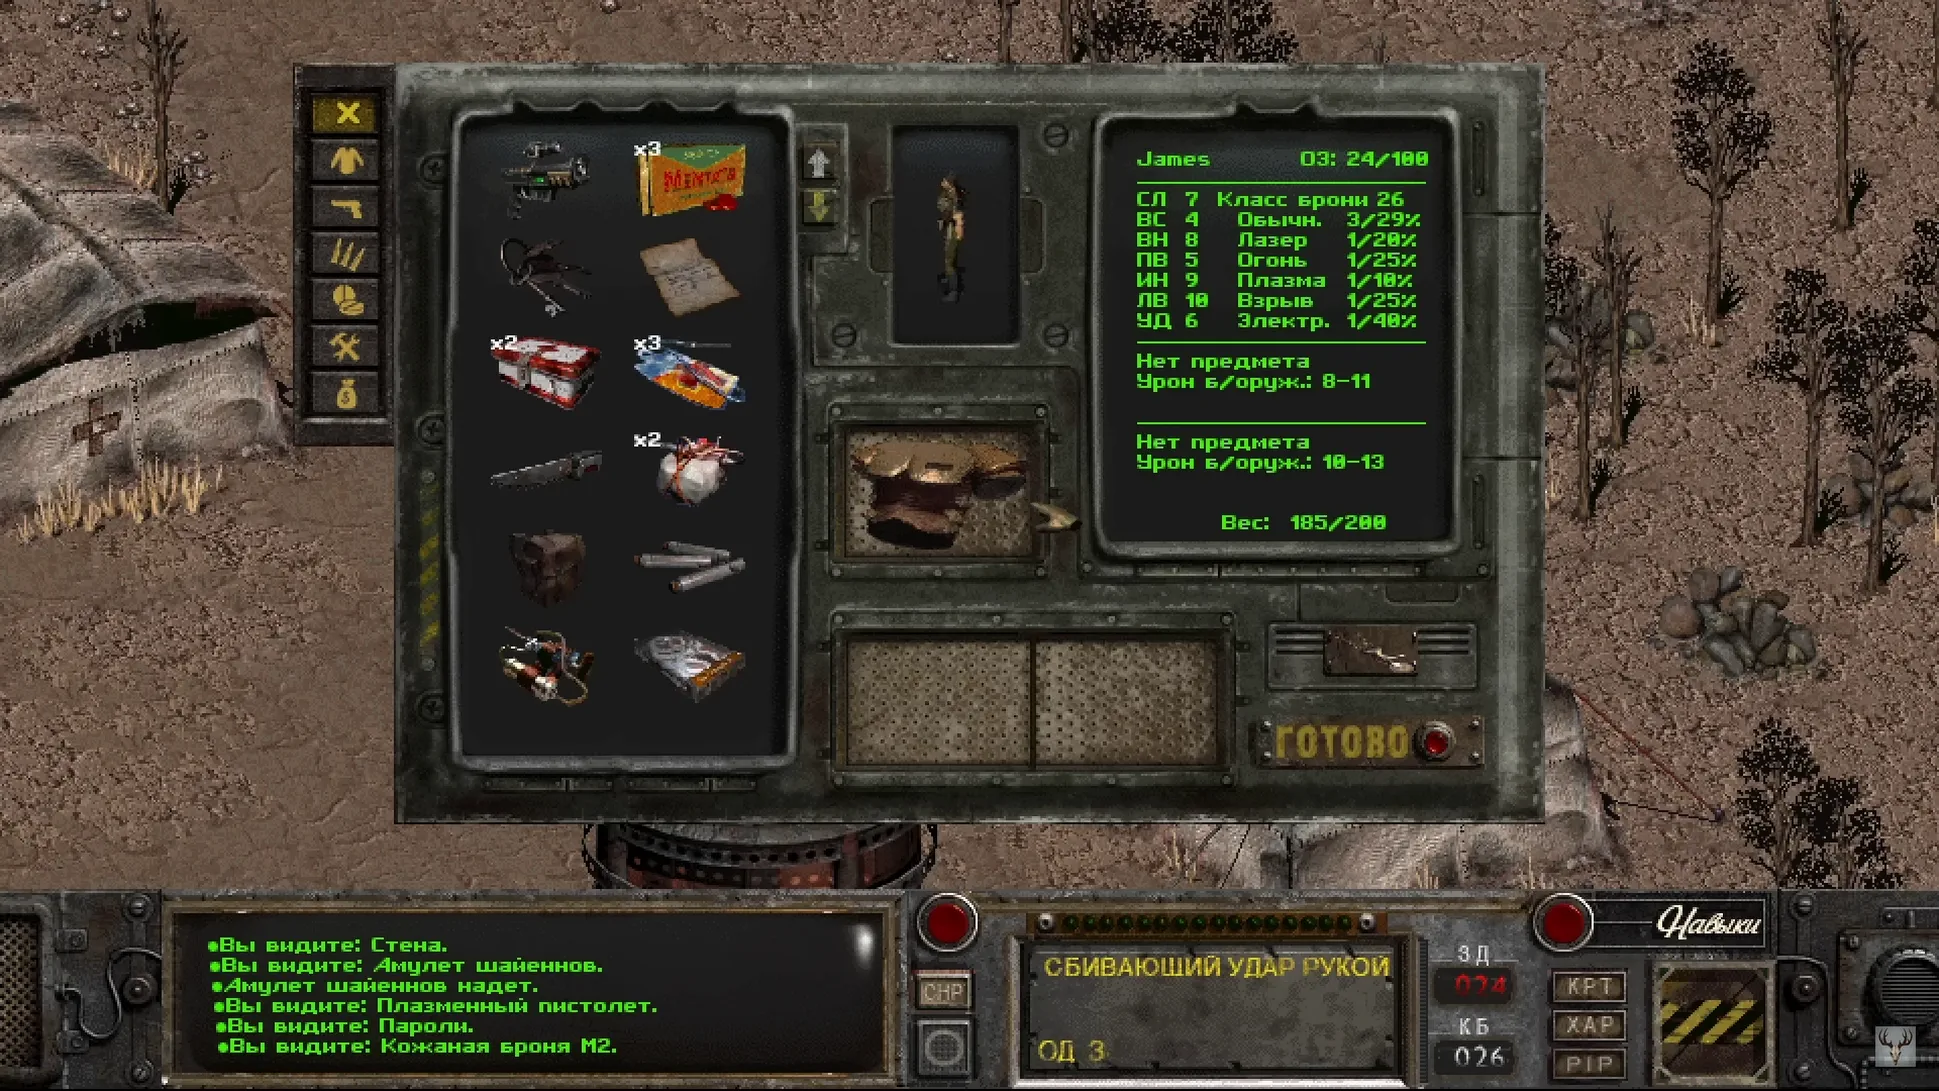 [Fallout: Nevada] На скриншоте: Инвентарь и ячейка для амулета в окошке над «Готово».